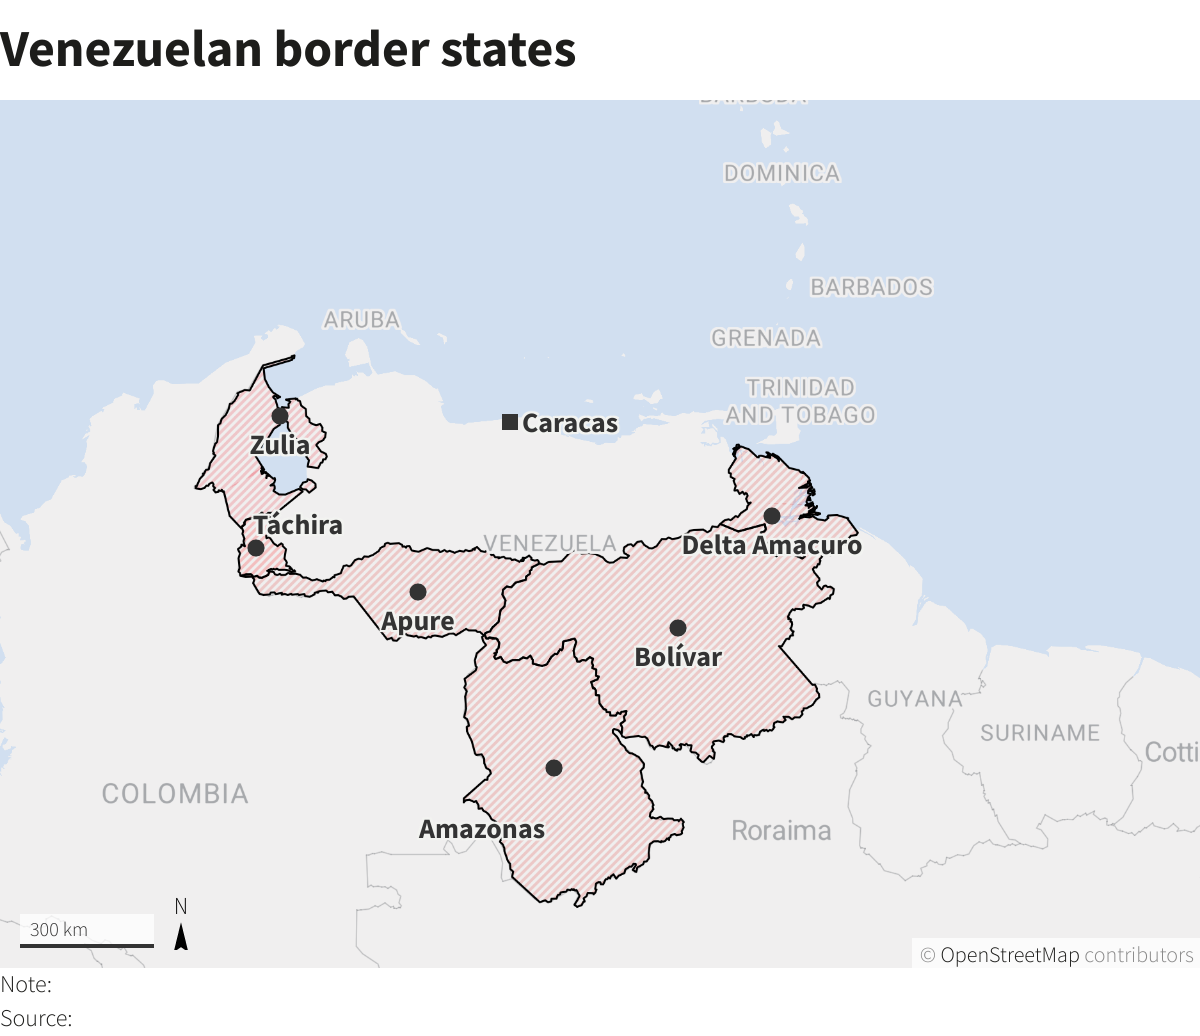 Venezuelan border states